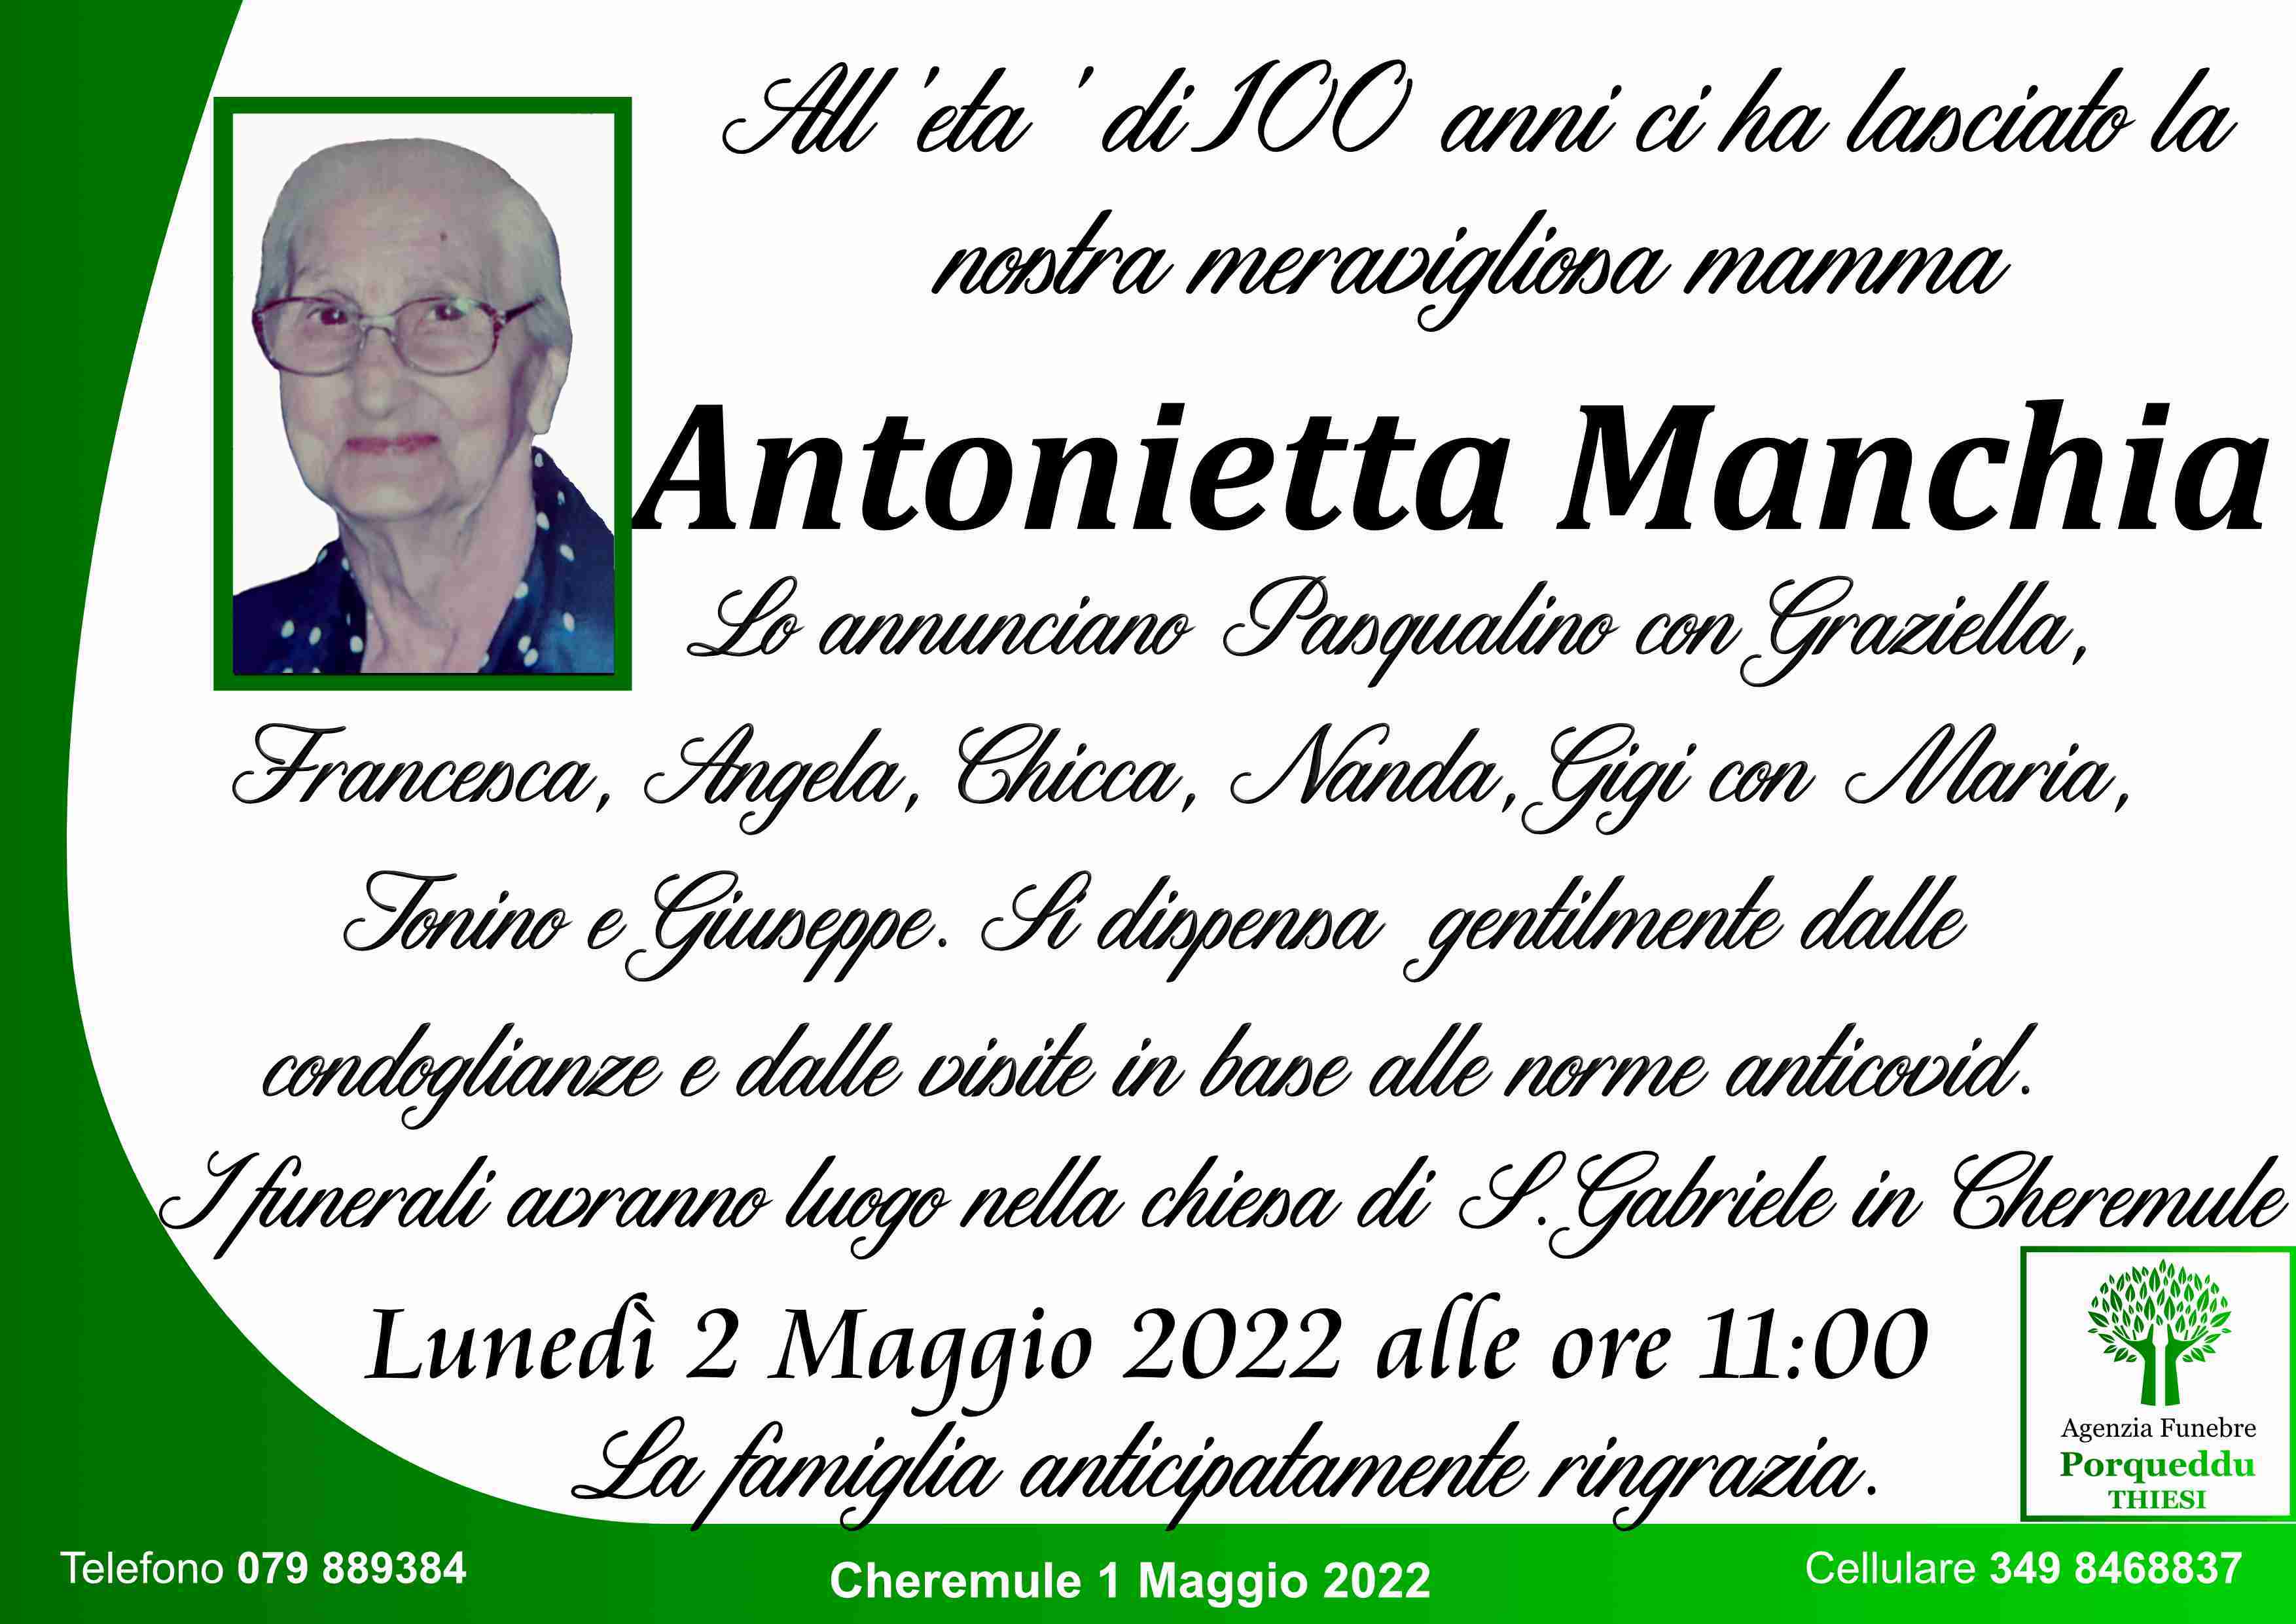 Antonietta Manchia